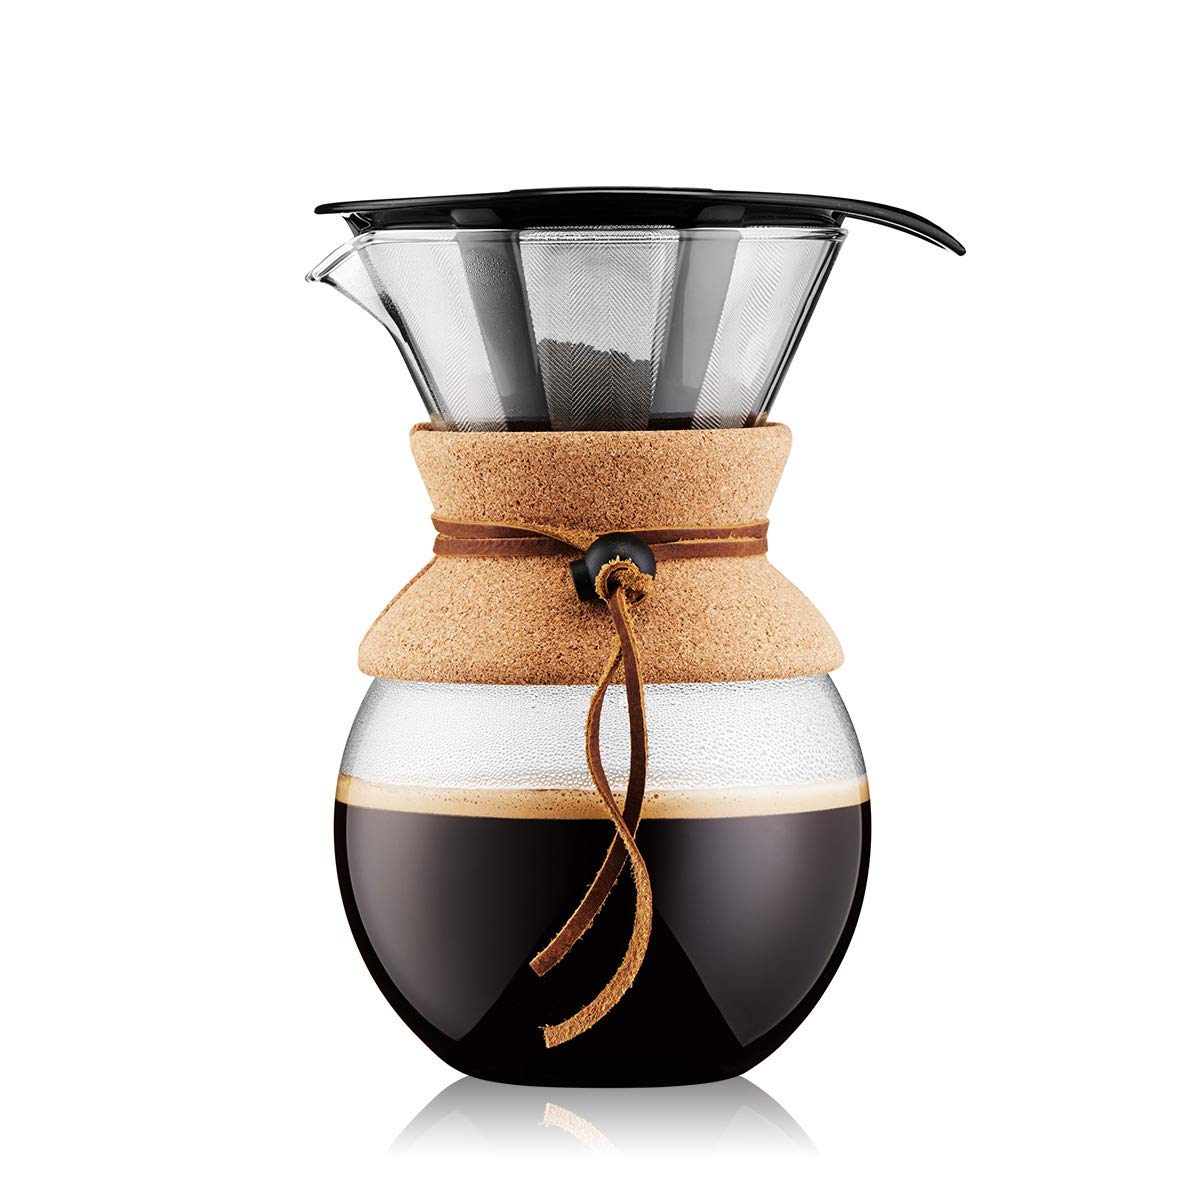 Bodum 11571-109 Pour Over Coffee Maker, Brown, 1 Liter, Glass